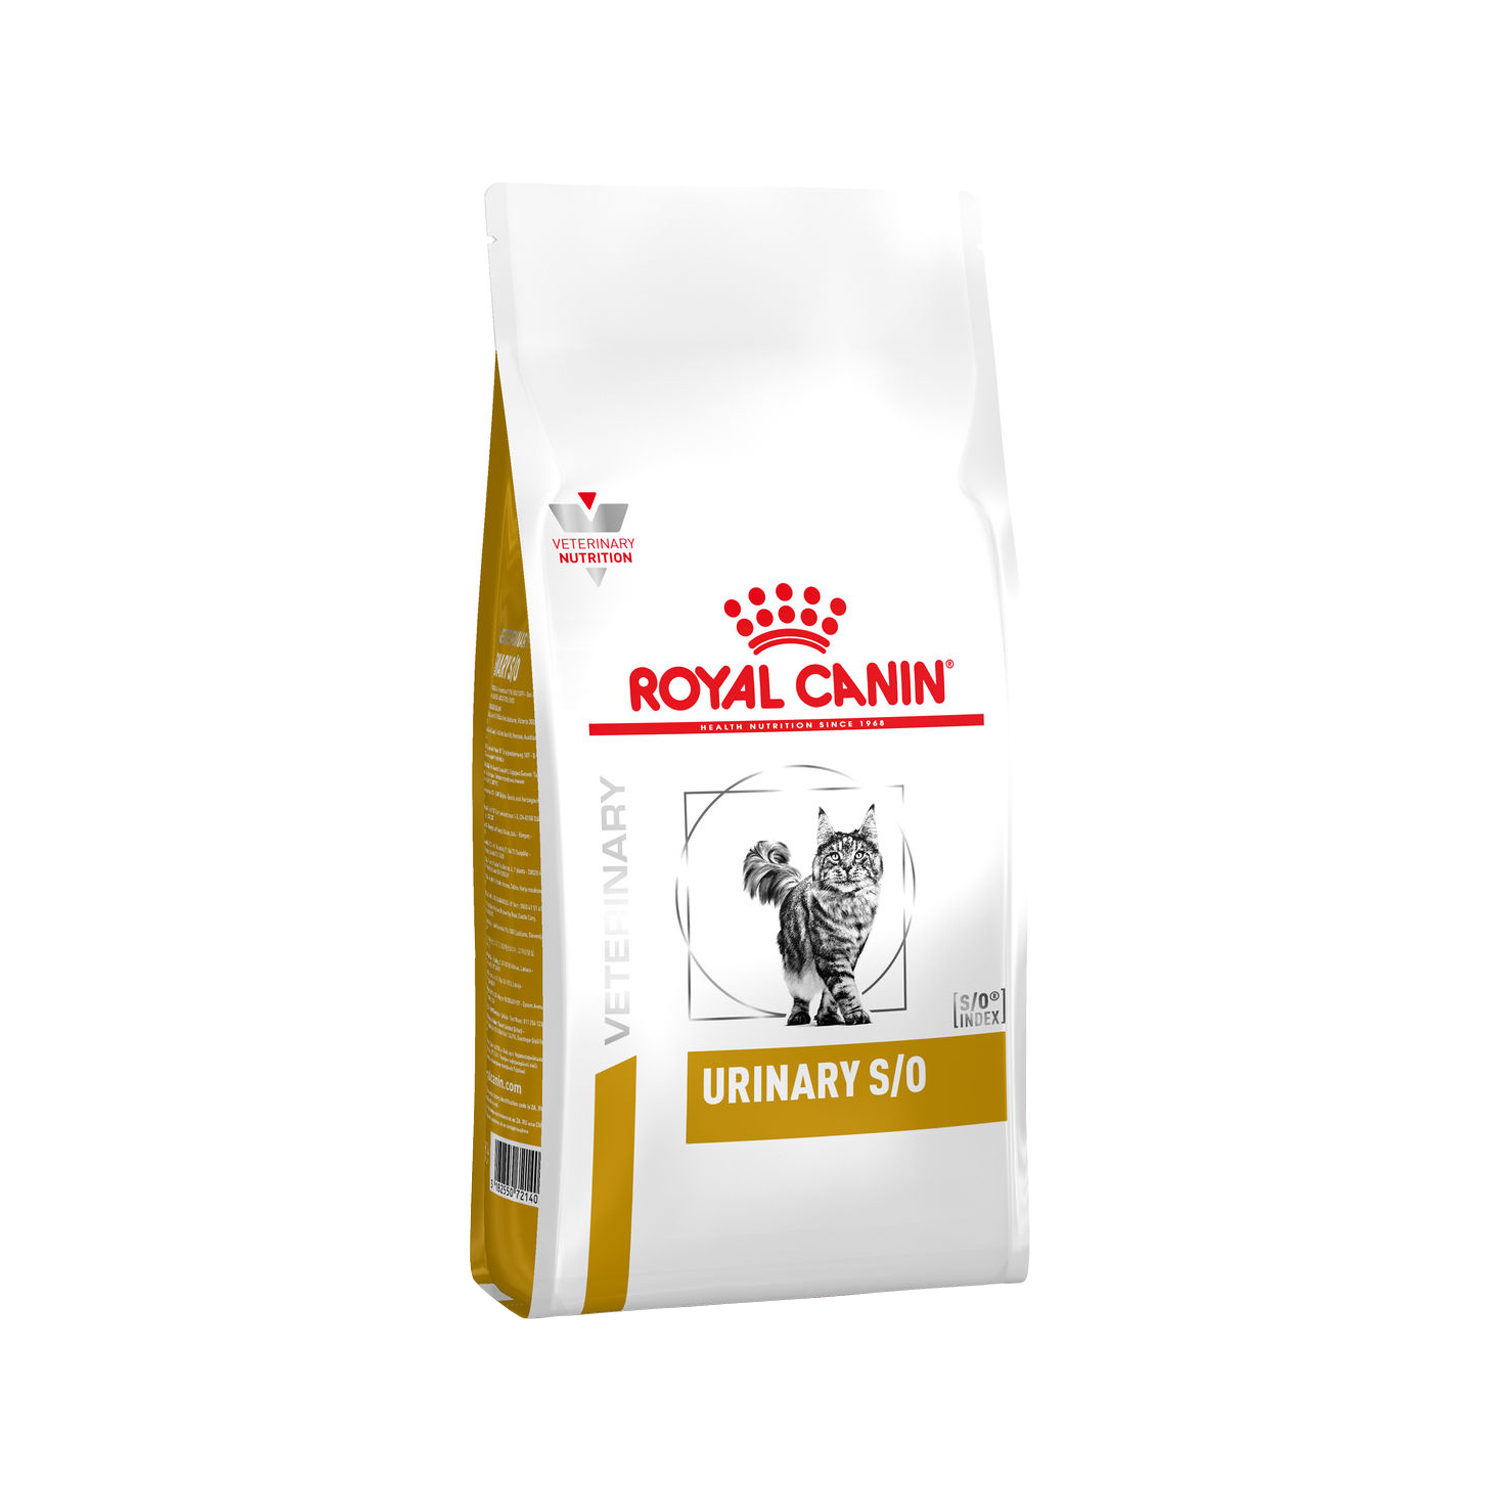 Royal Canin Urinary S/O (LP 34) Katzenfutter - 3,5 kg